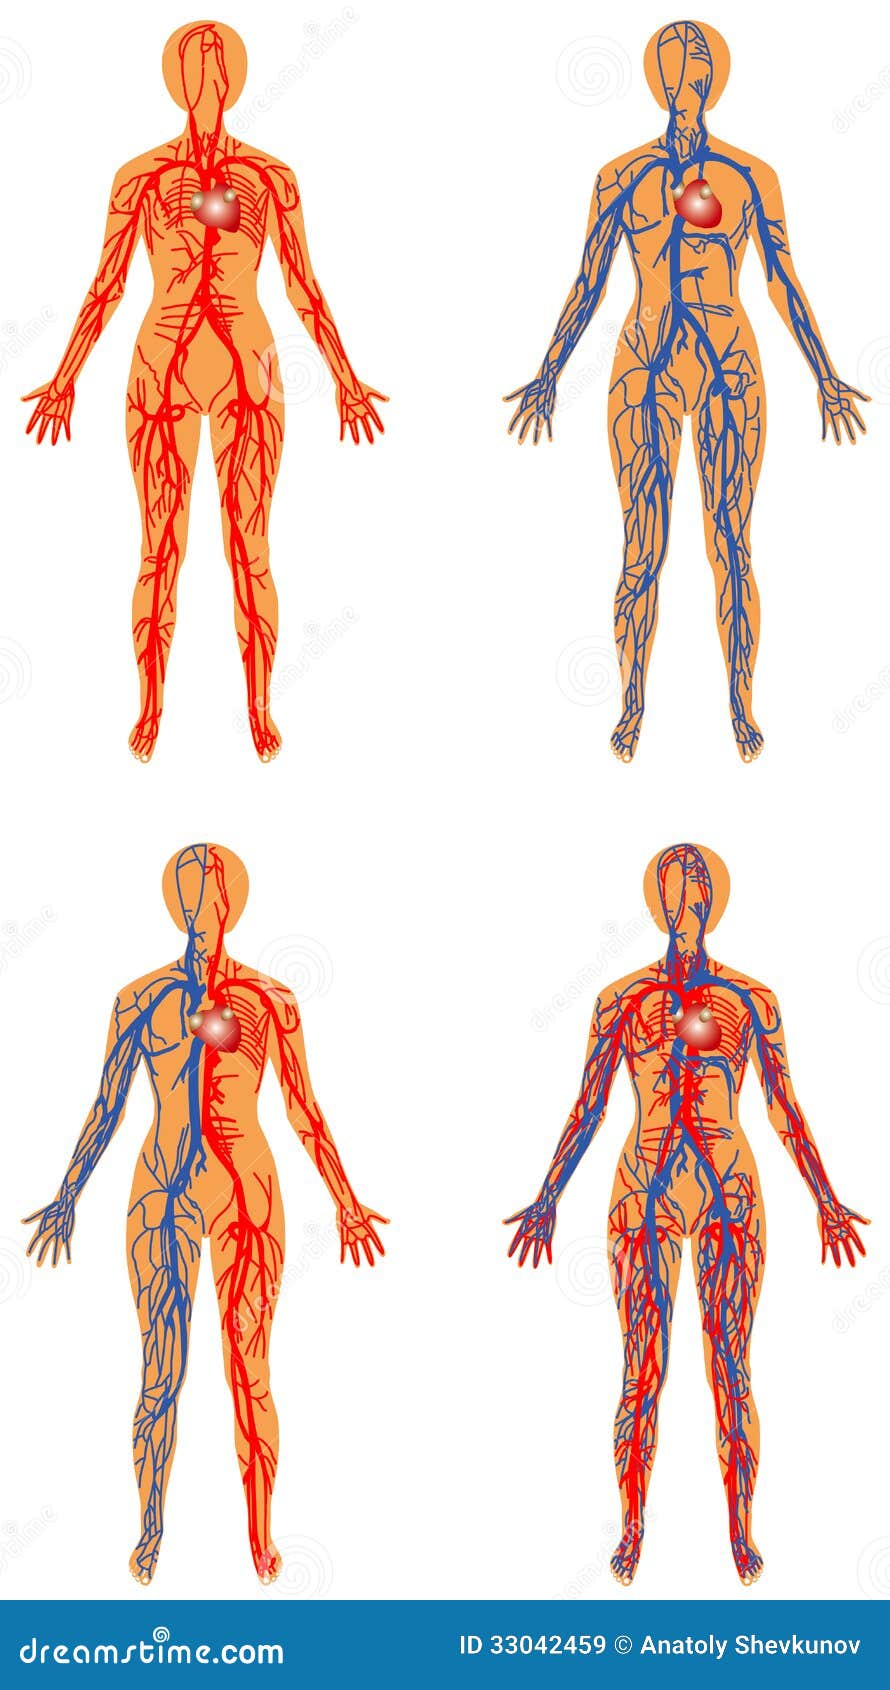 organ system of human body